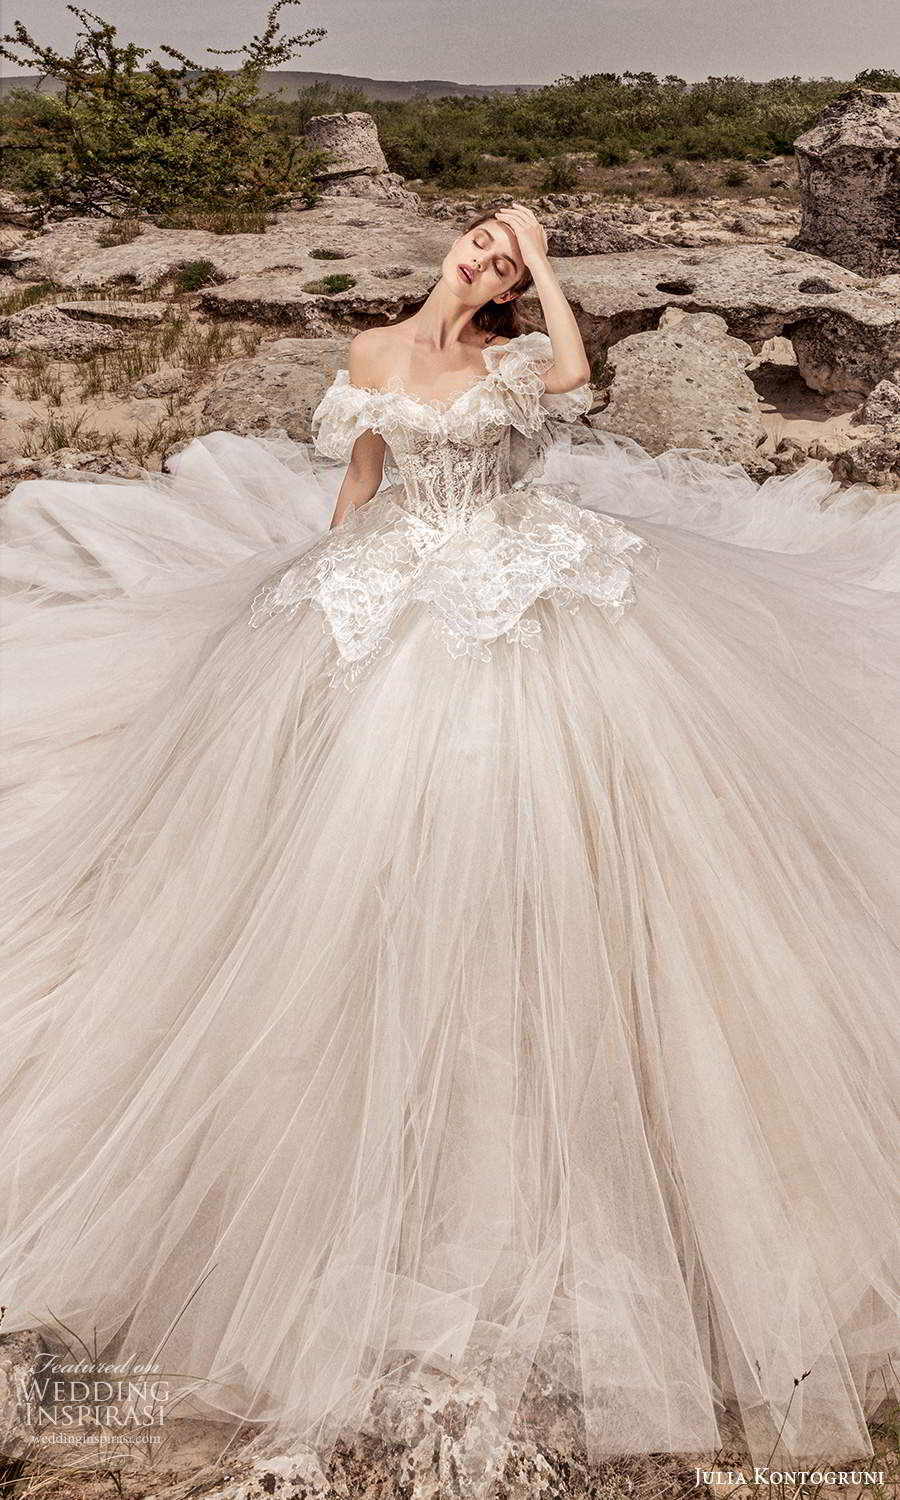 julia kontogruni 2021 bridal off shoulder short puff sleeves sweetheart neckline embellished bodice ball gown wedding dress cathedral train (10) mv